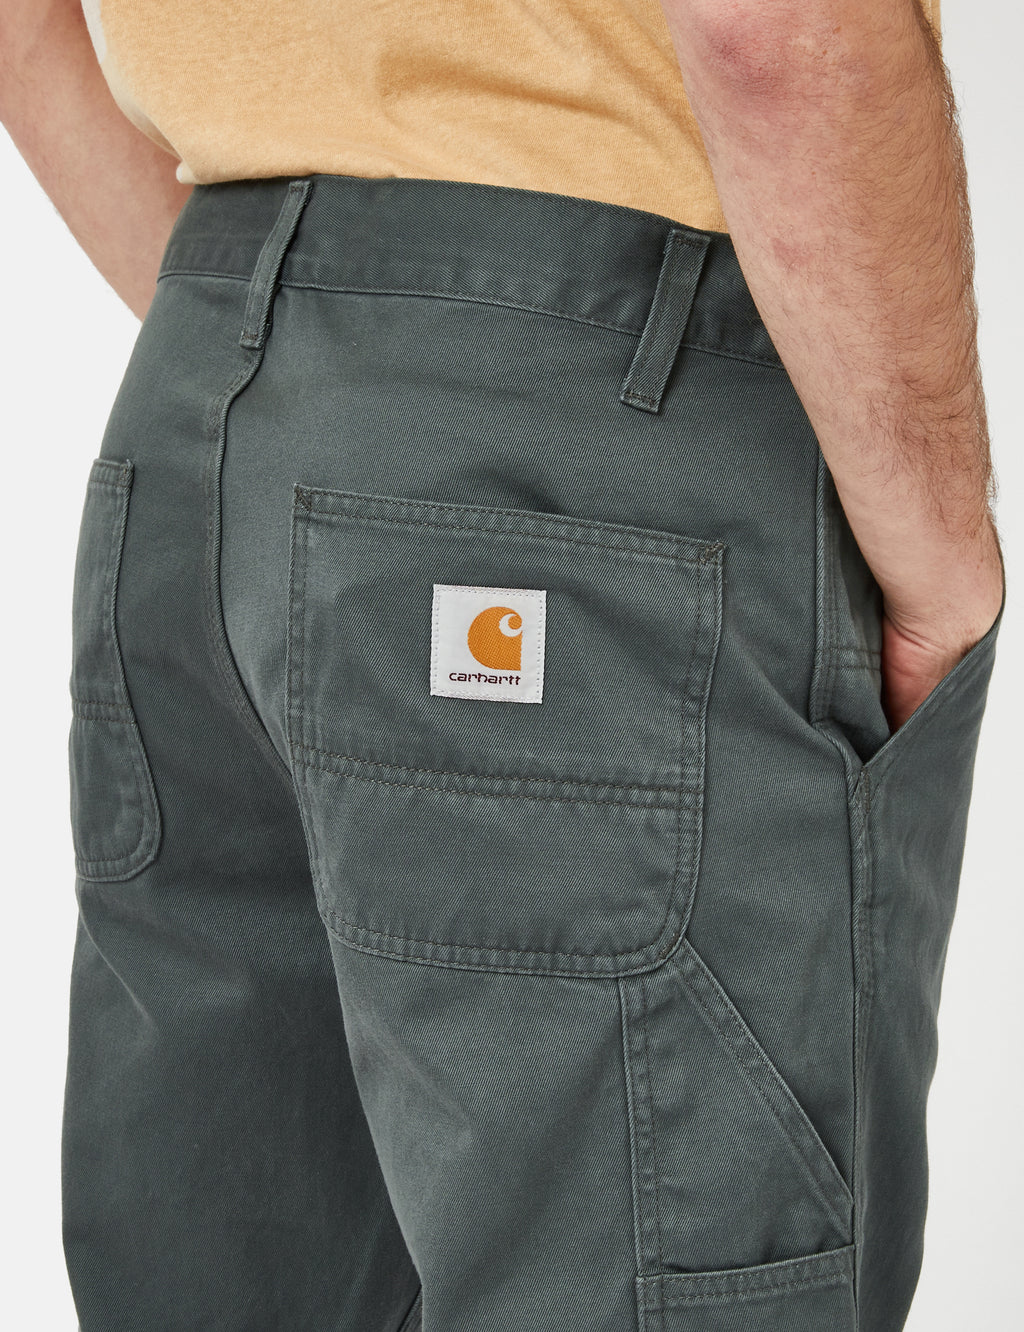 Carhartt-WIP Ruck Single Knee Pant (Regular) - Jura Green Stone Washed